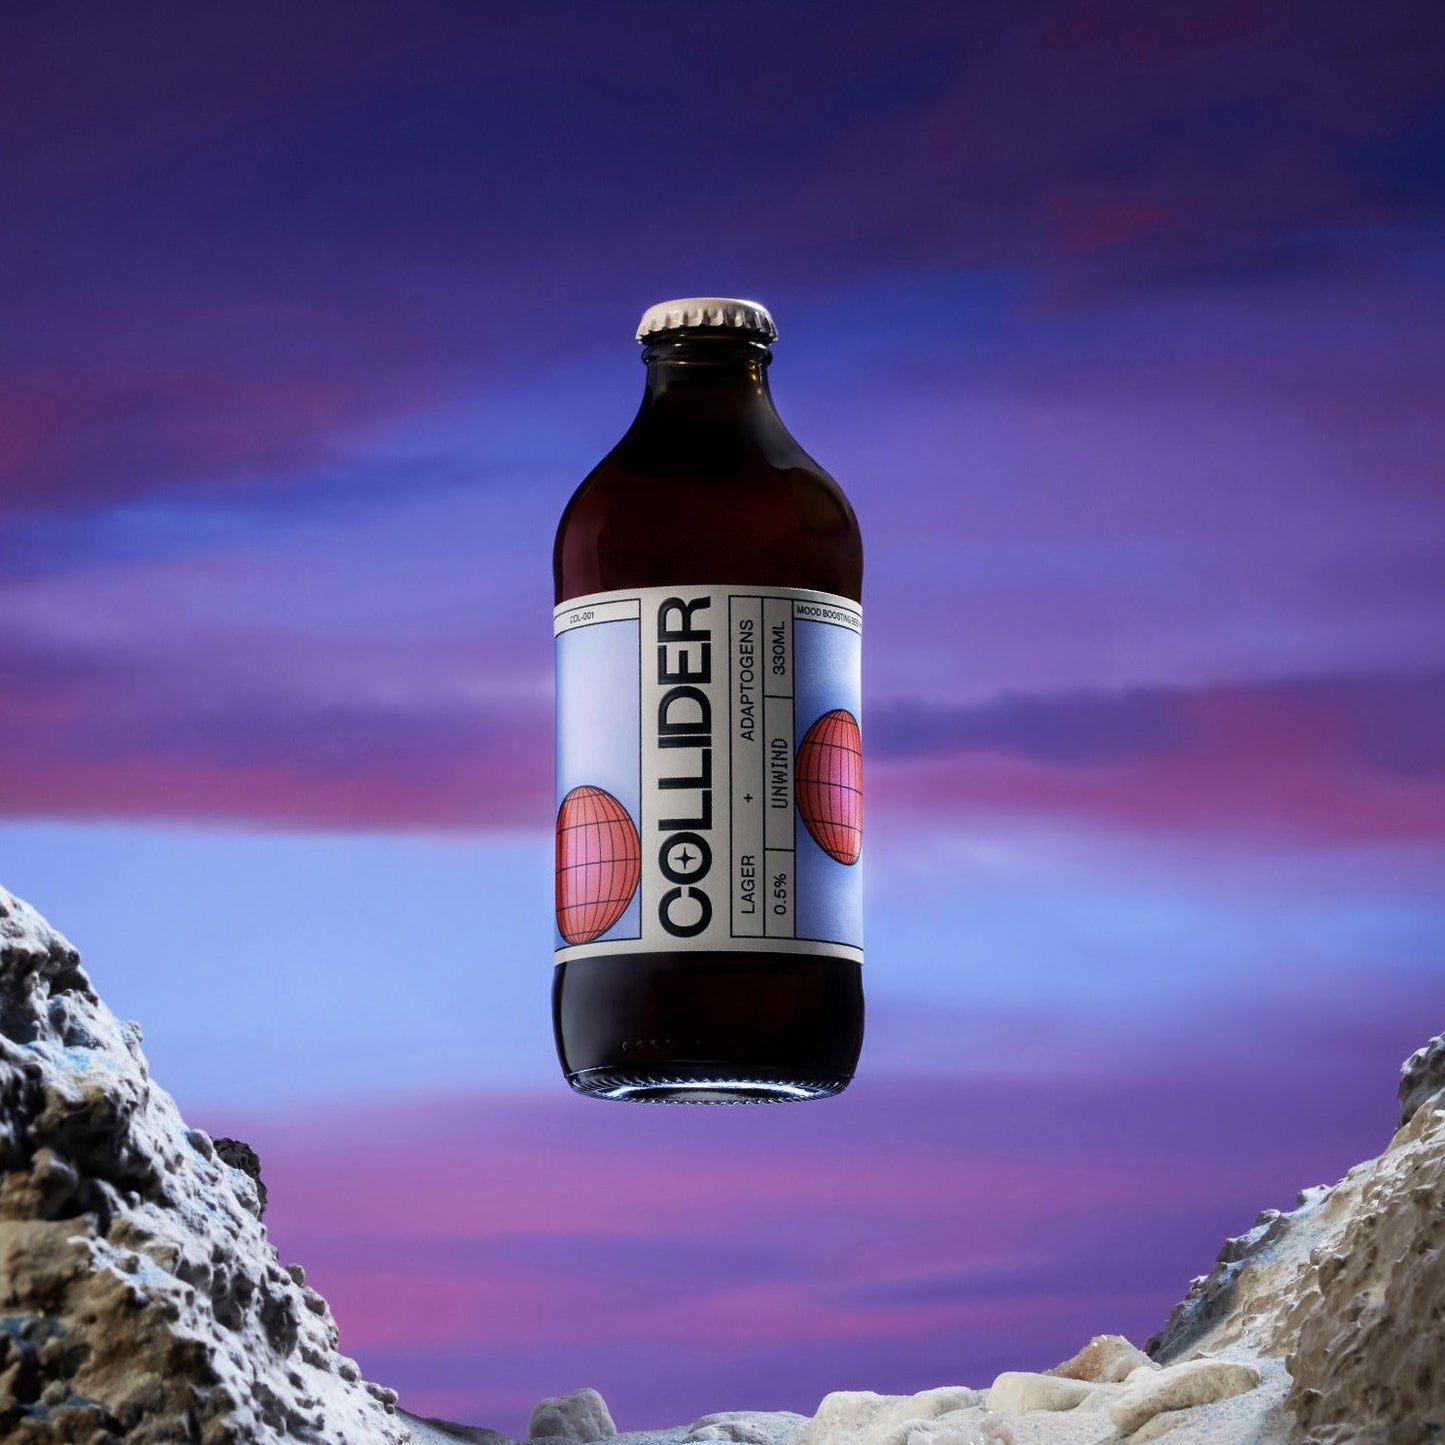 Collider Adaptogenic Lager - Alcohol Free Nootropic Beer [Bottle]